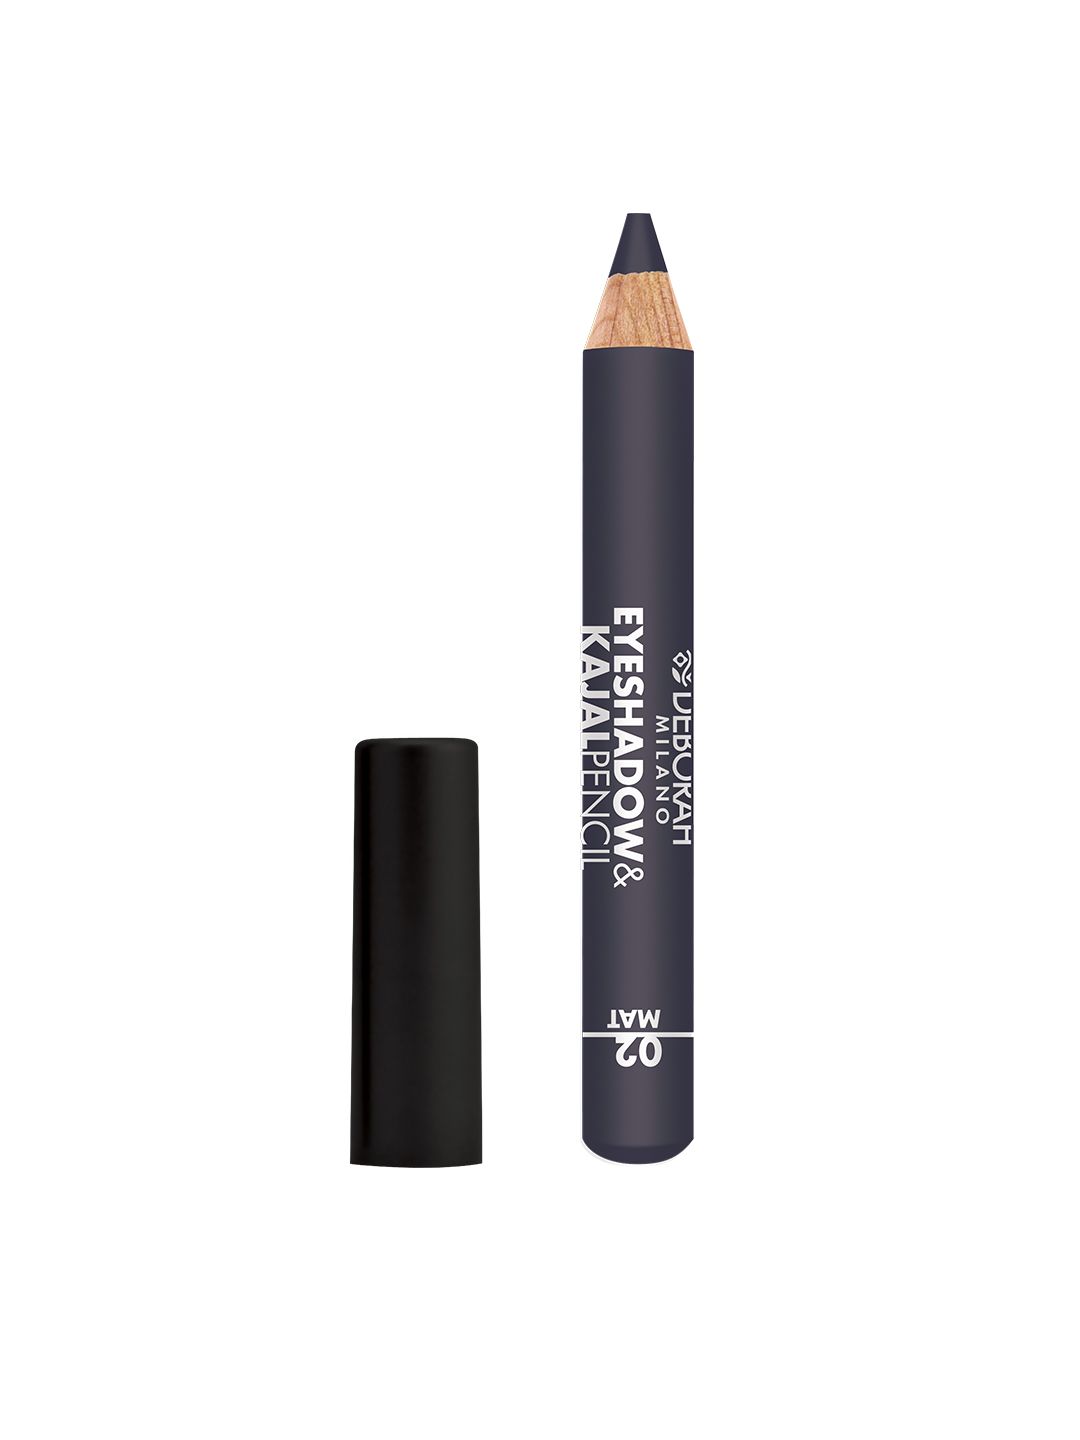 Deborah Milano 02 MAT GREY Eyeshadow & Kajal Pencil 2 g Price in India